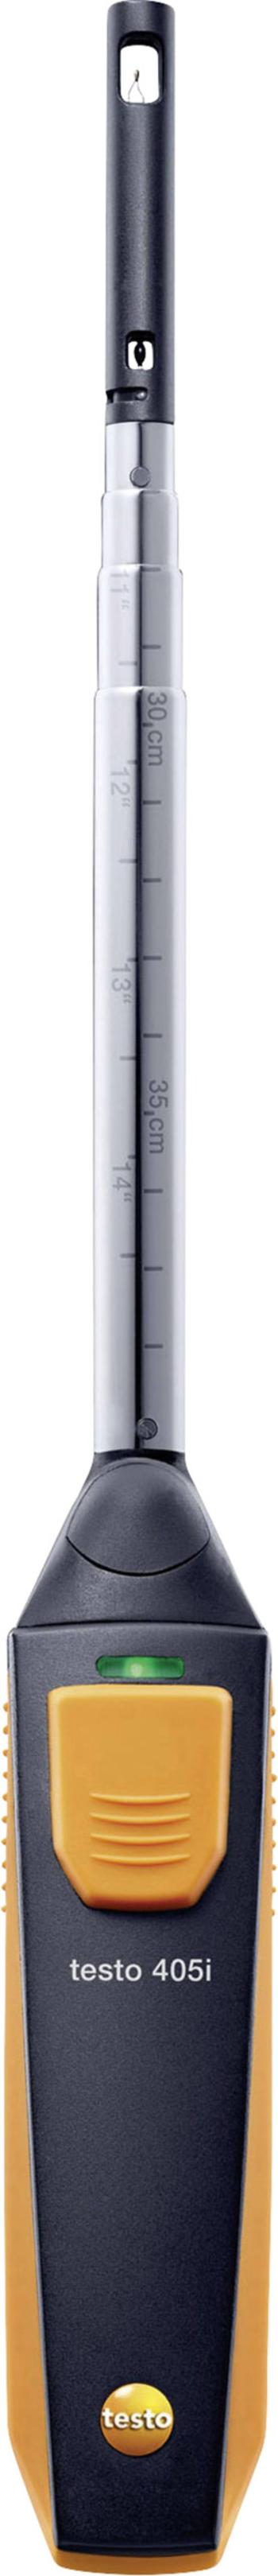 Termický anemometer TESTO 405I, Smart Probes